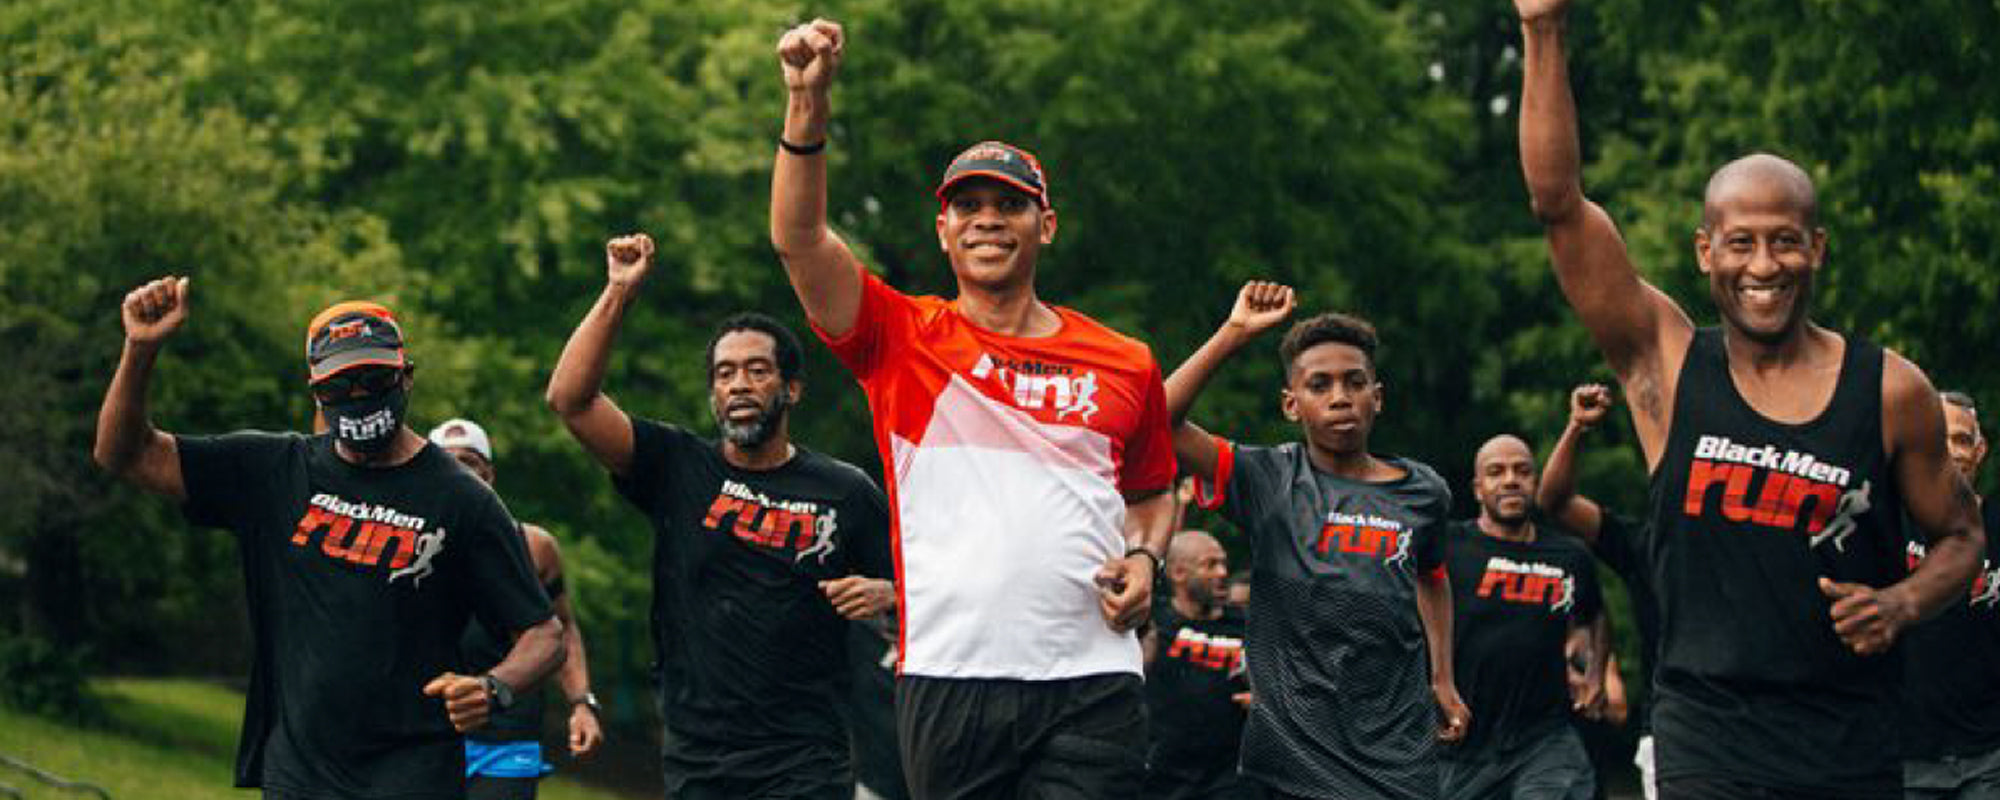 Image of Black Men Run members on a group run